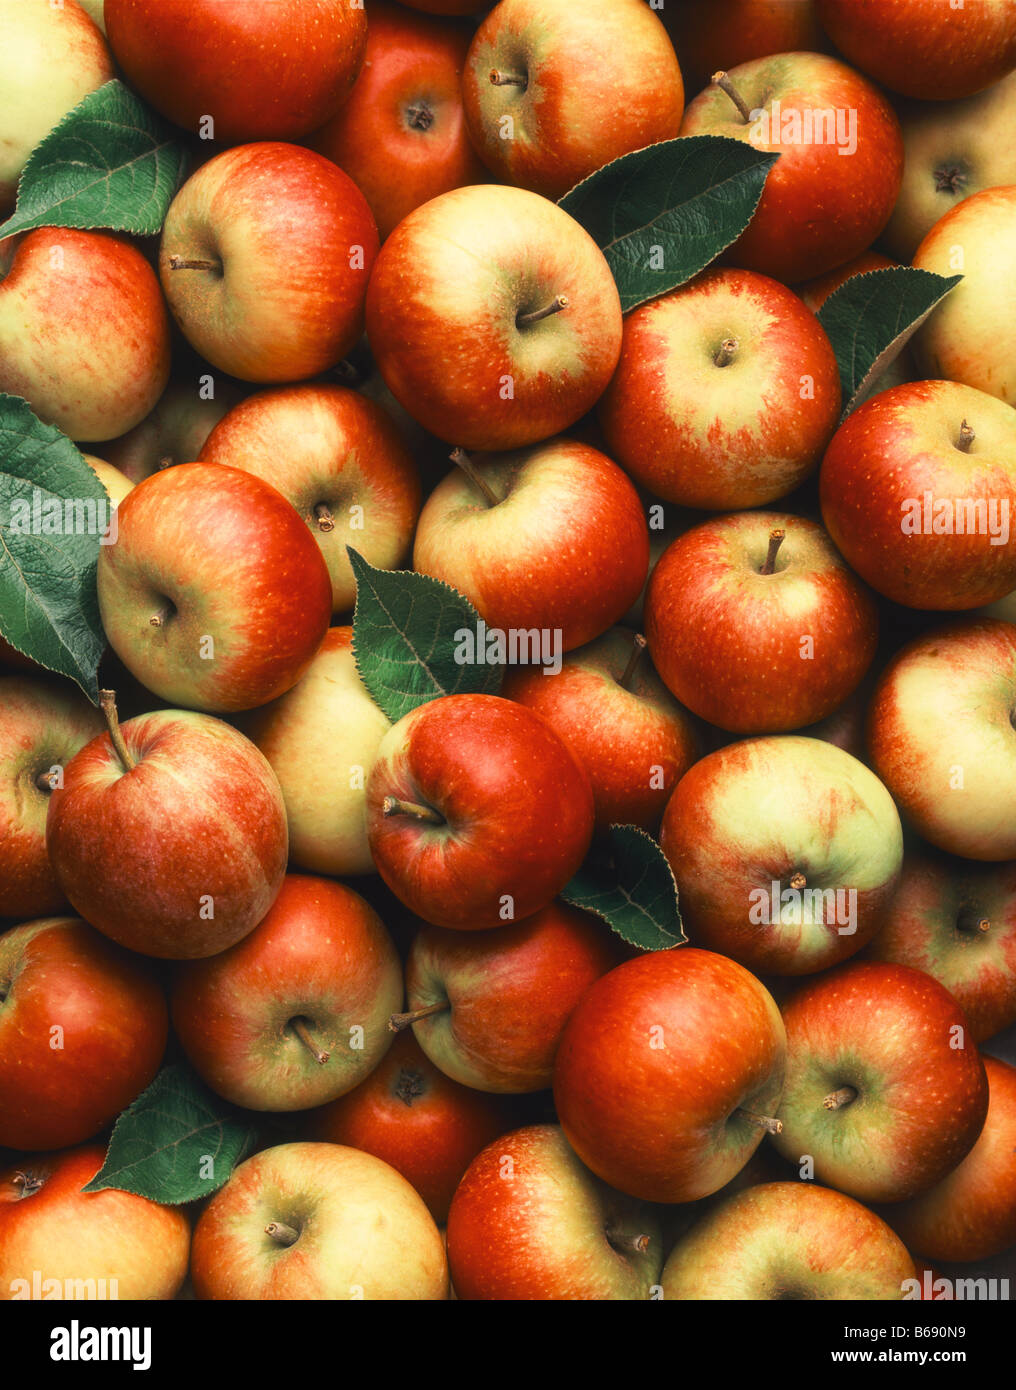 english apples full bleed Stock Photo